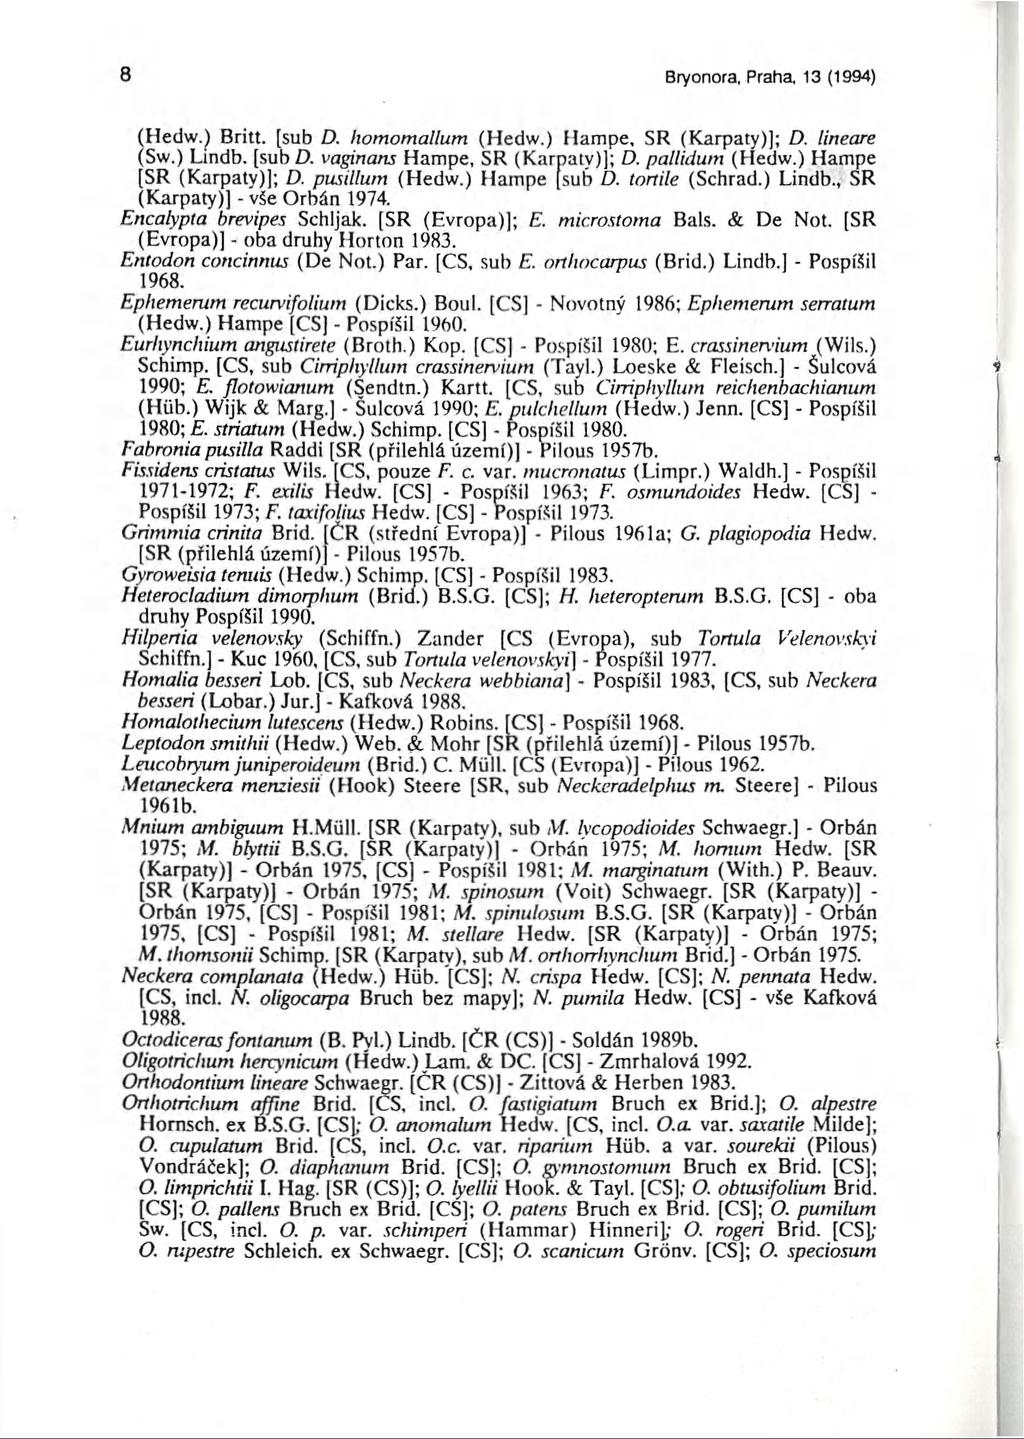 8 Bryonora, Praha 13 (1994) (Hedw.) Britt, [sub D. homomallum (Hedw.) Hampe, SR (Karpaty)]; D. lineare (Sw.) Lindb. [sub D. vaginans Hampe, SR (Karpaty)]; D. pallidum (Hedw.) Hampe [SR (Karpaty)]; D.